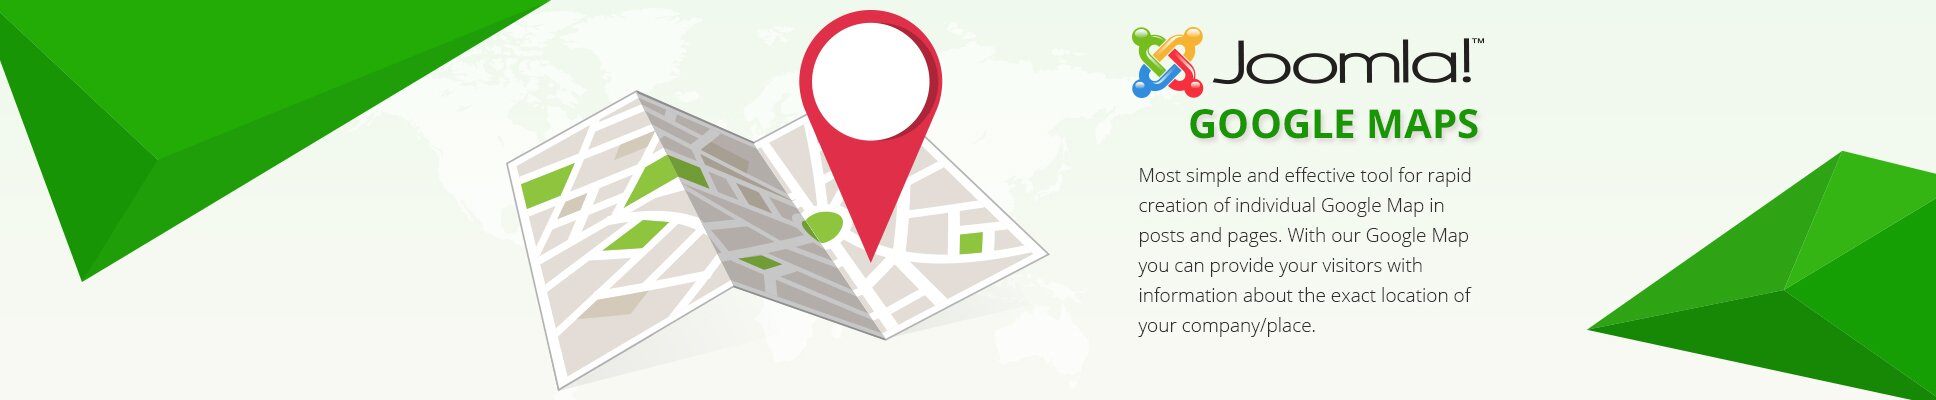 Joomla Google Maps Demo 3 Google Map Shapes